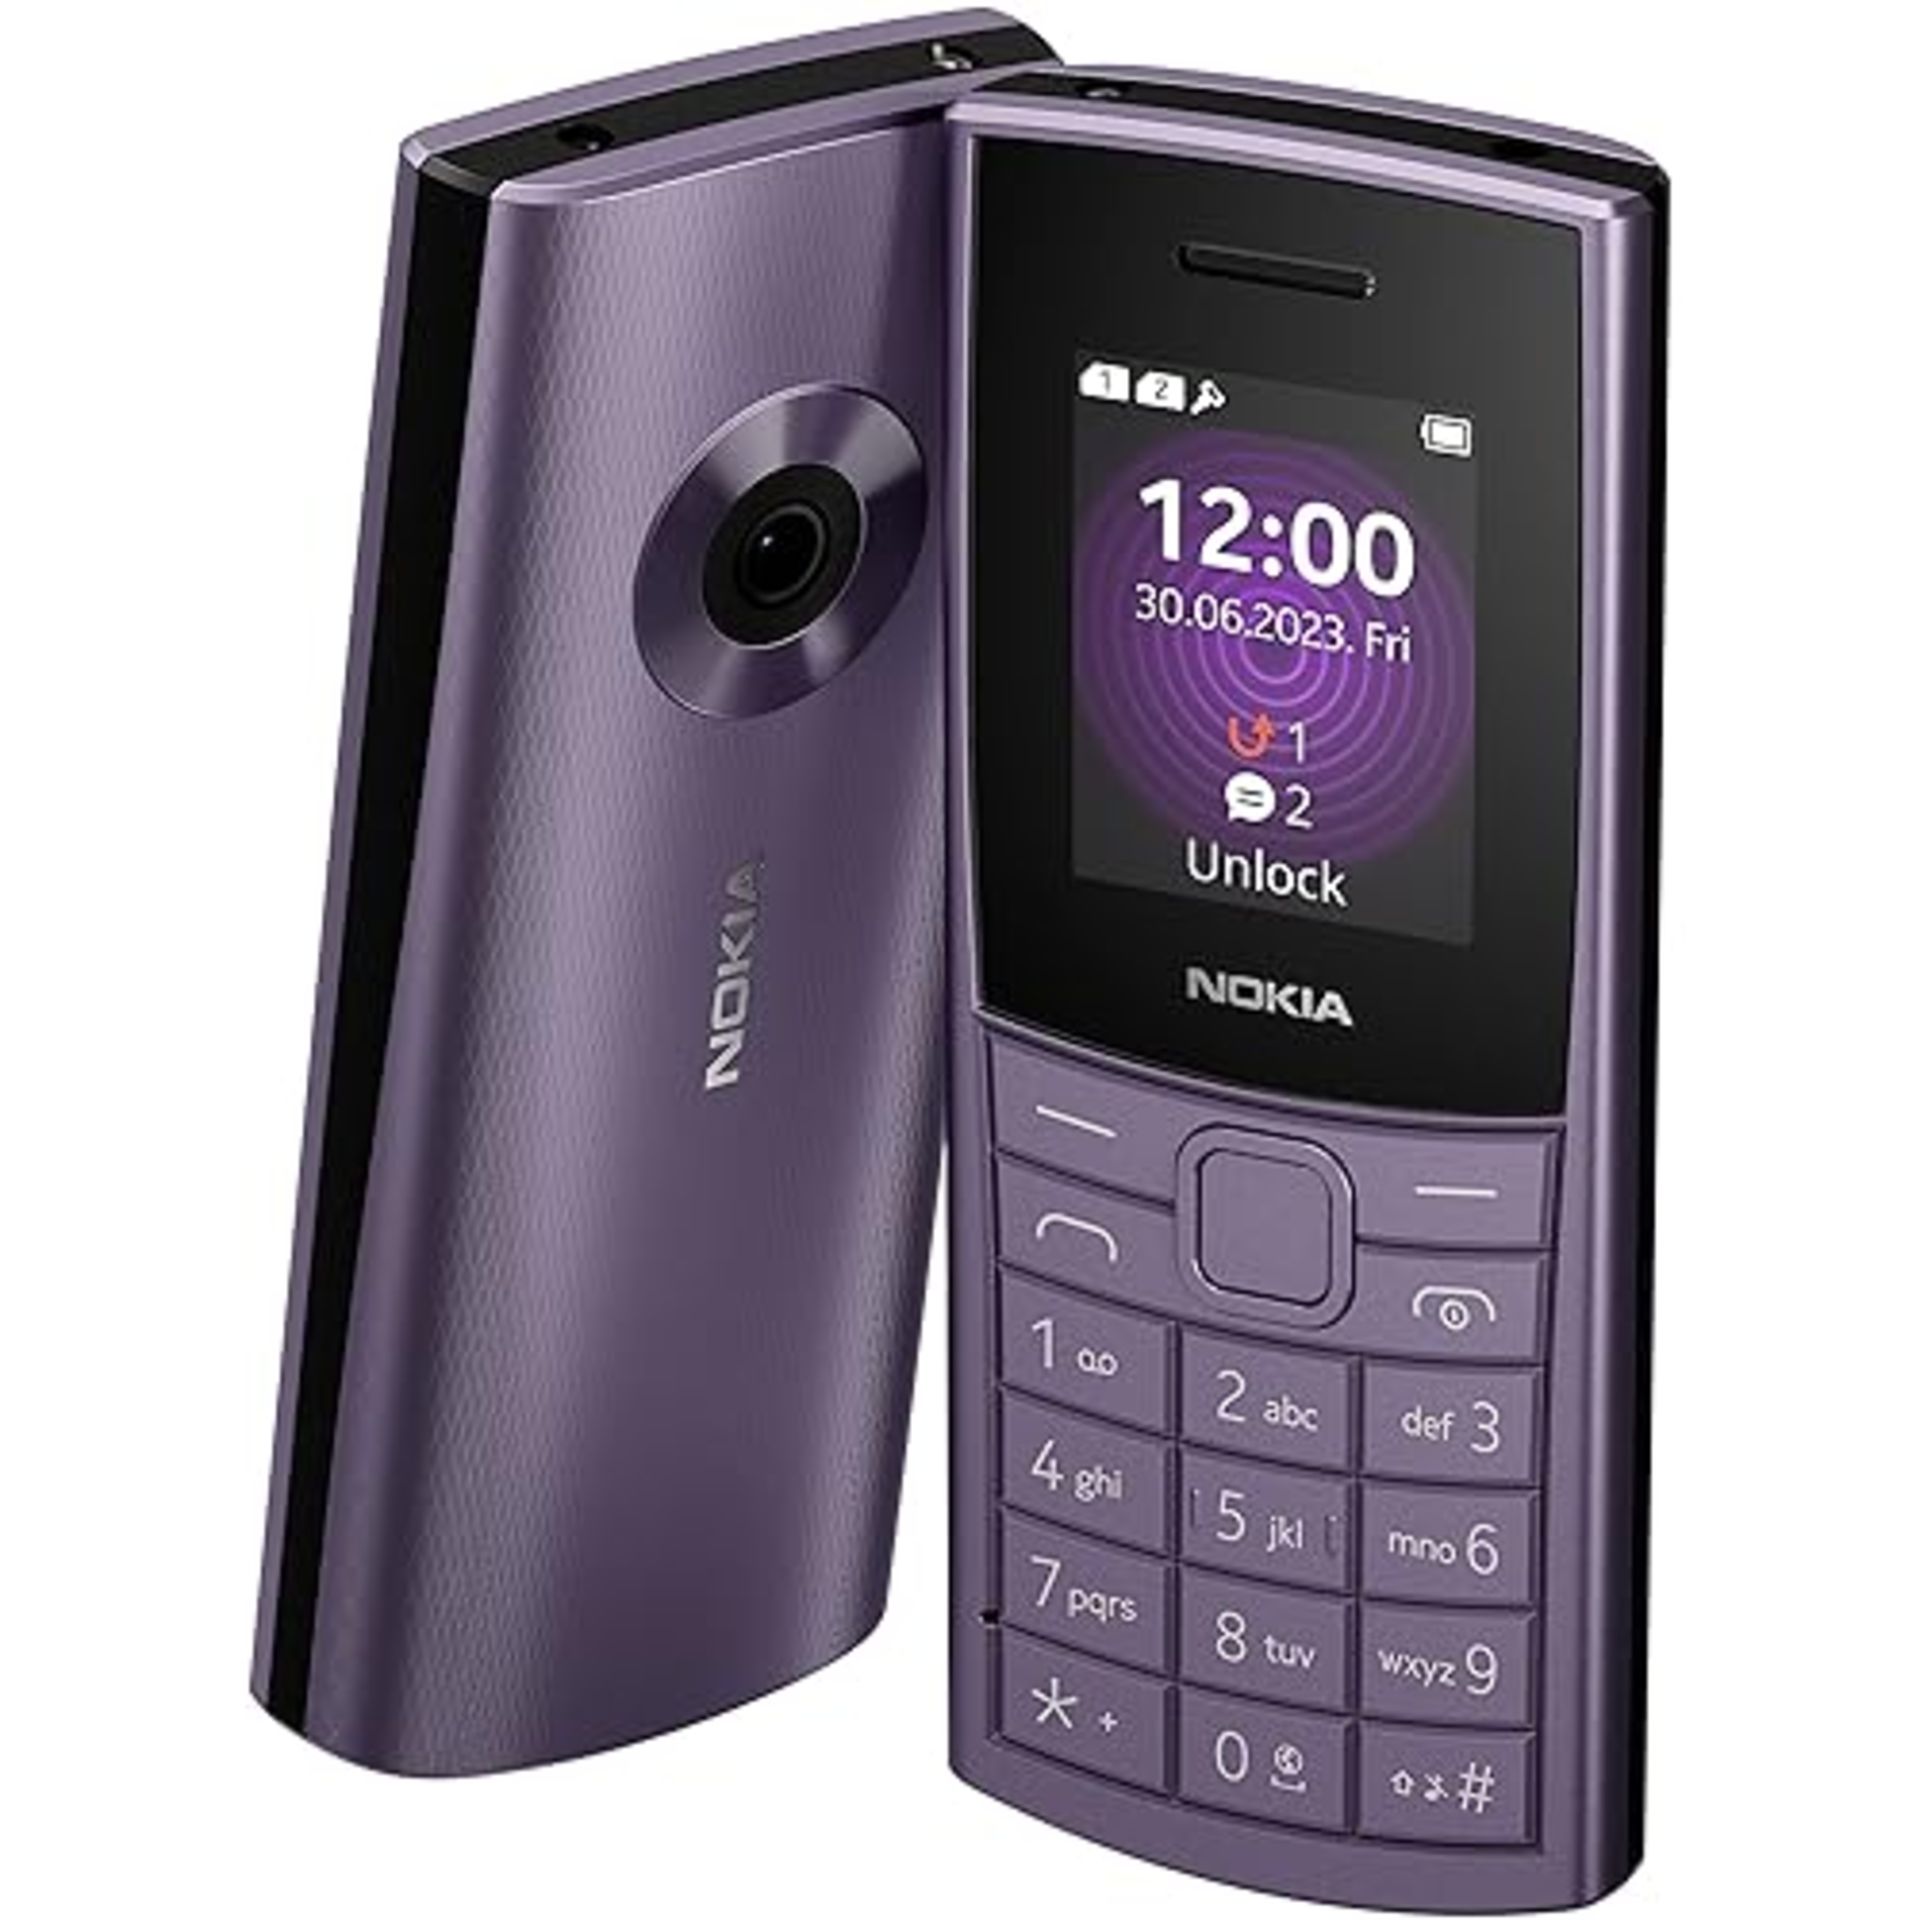 Nokia 110 4G Feature Phone With Camera, Bluetooth, FM radio, MP3 player, MicroSD, Long-Lasting Batt